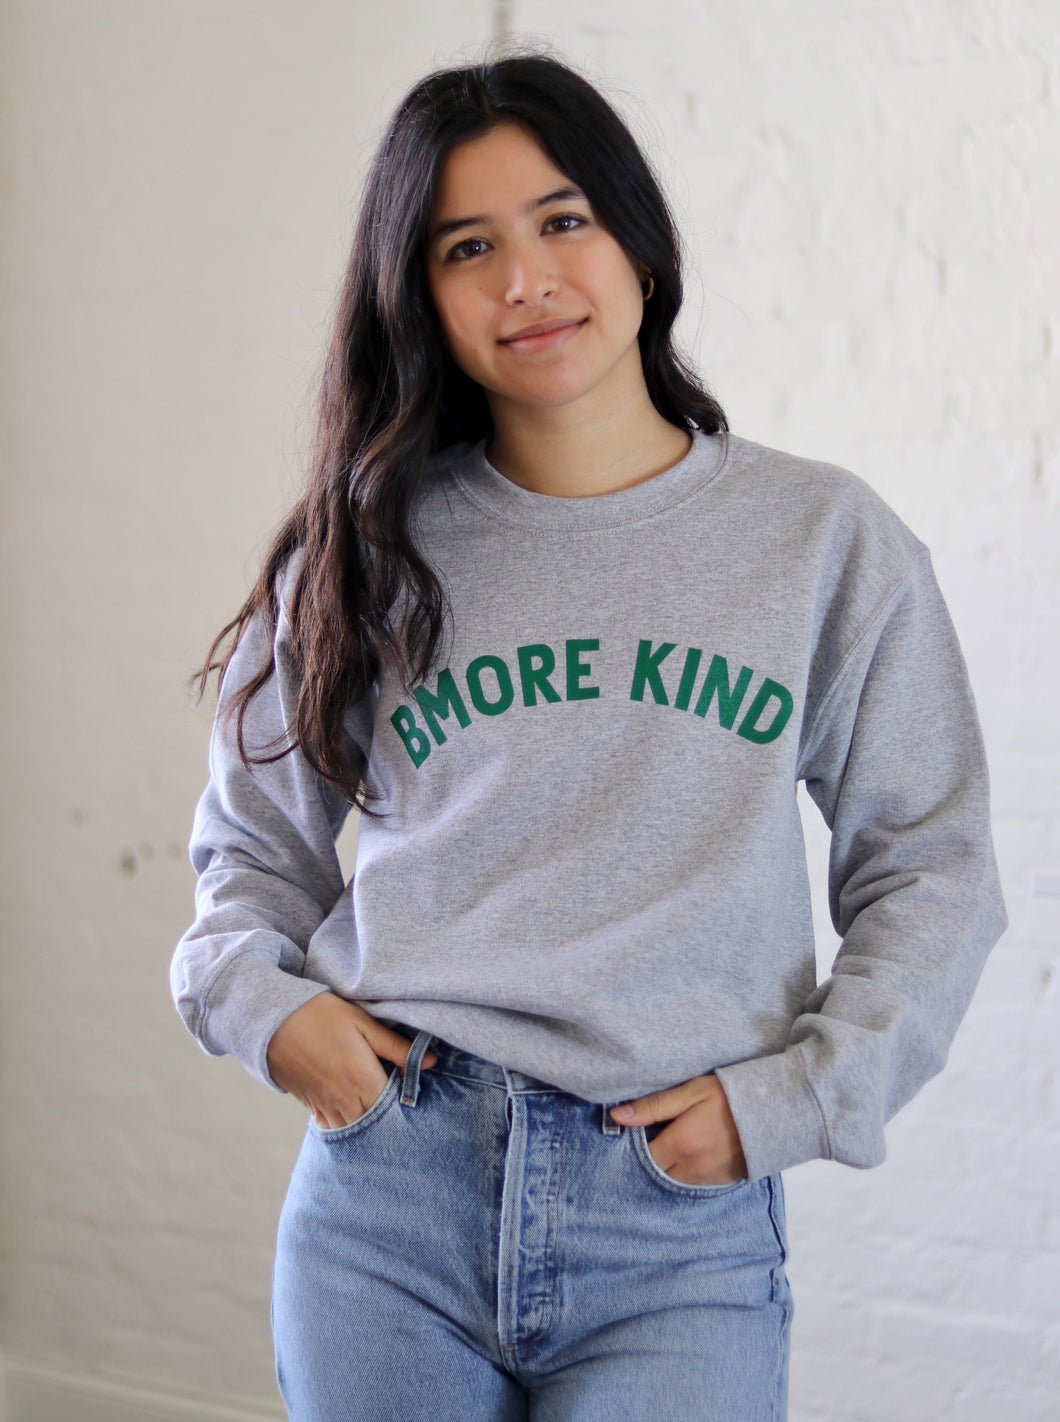 Bmore Kind Crewneck Sweatshirt